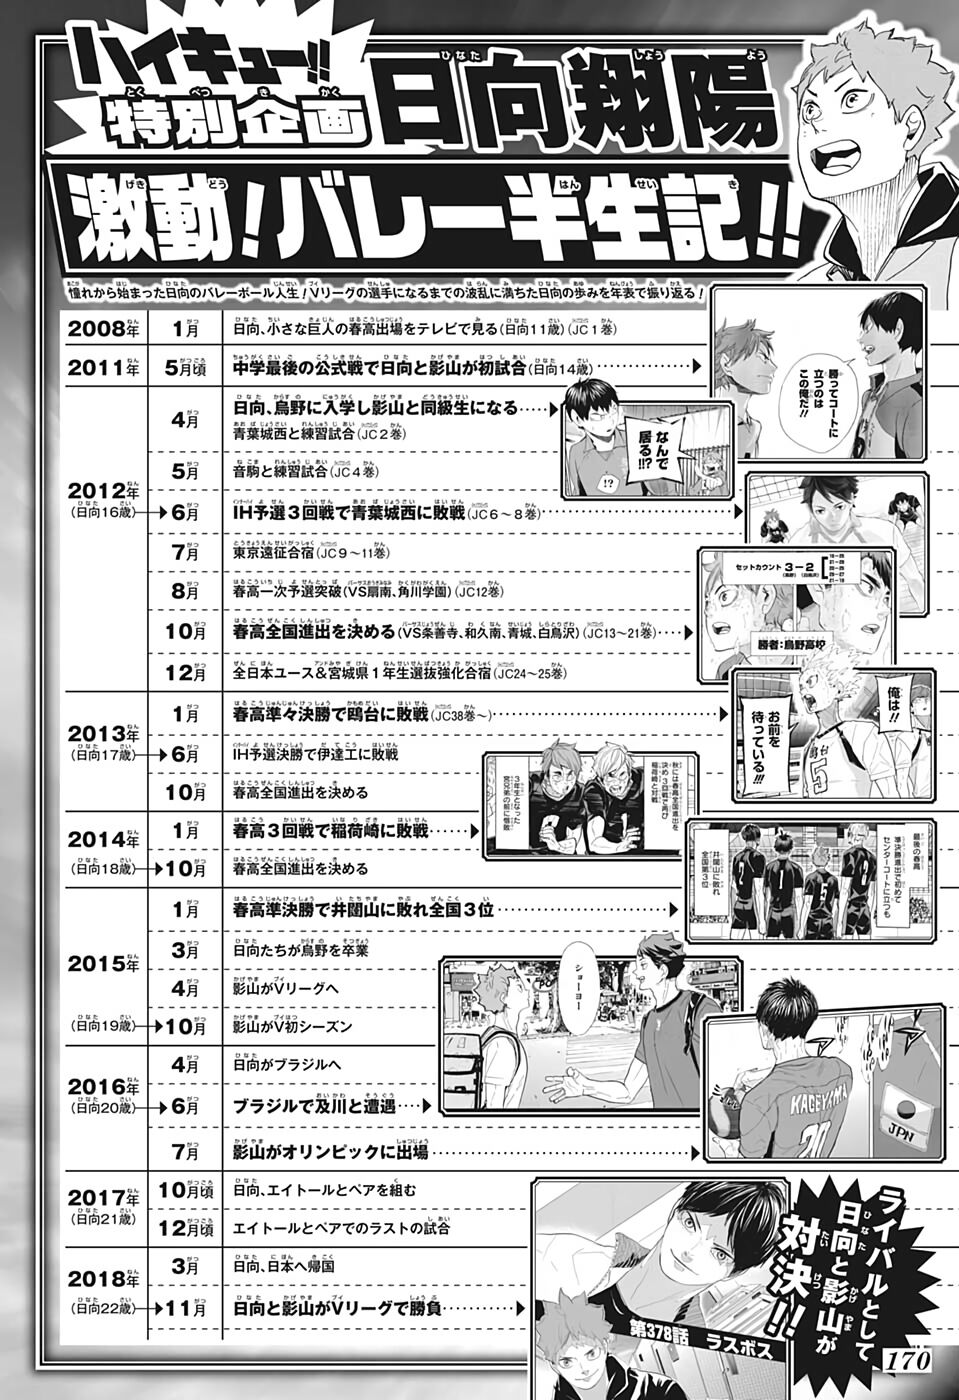 Haikyuu 4 - 01 - 17 - Lost in Anime